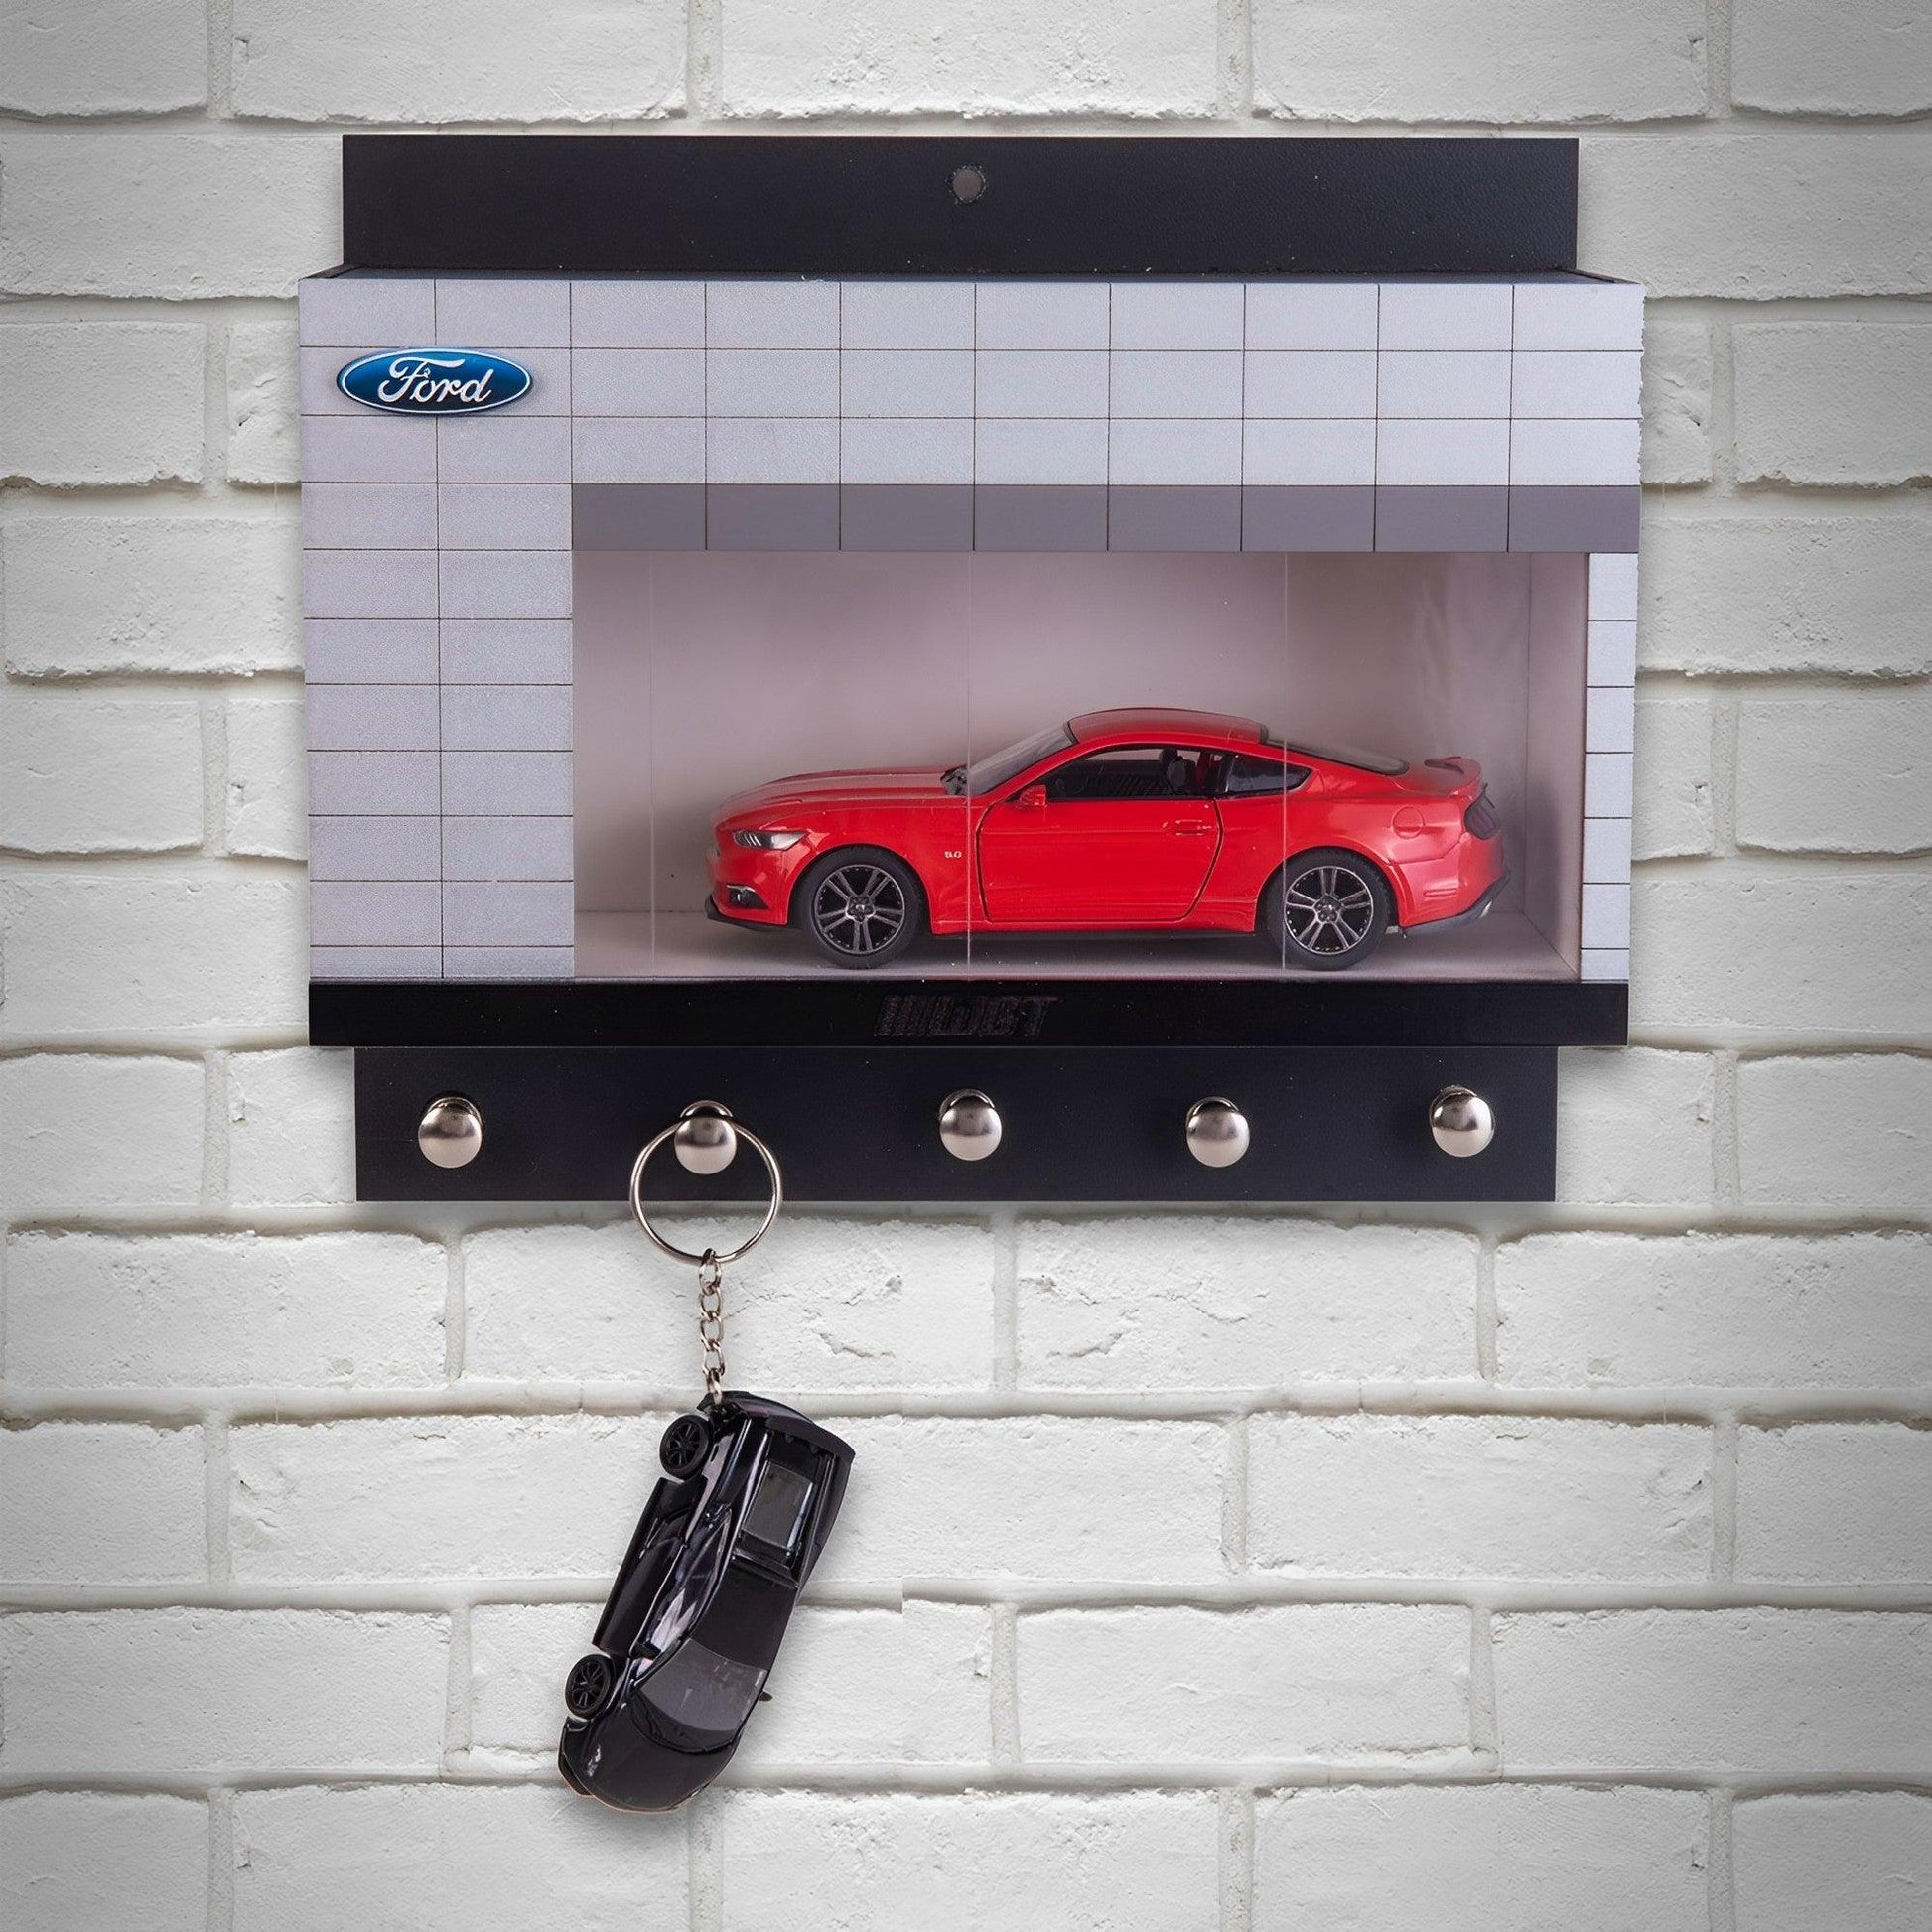 Ford Dealership Wall Key Hook Rack - Exclusive Item - Handcrafted Key Holder - Brazilian Shop